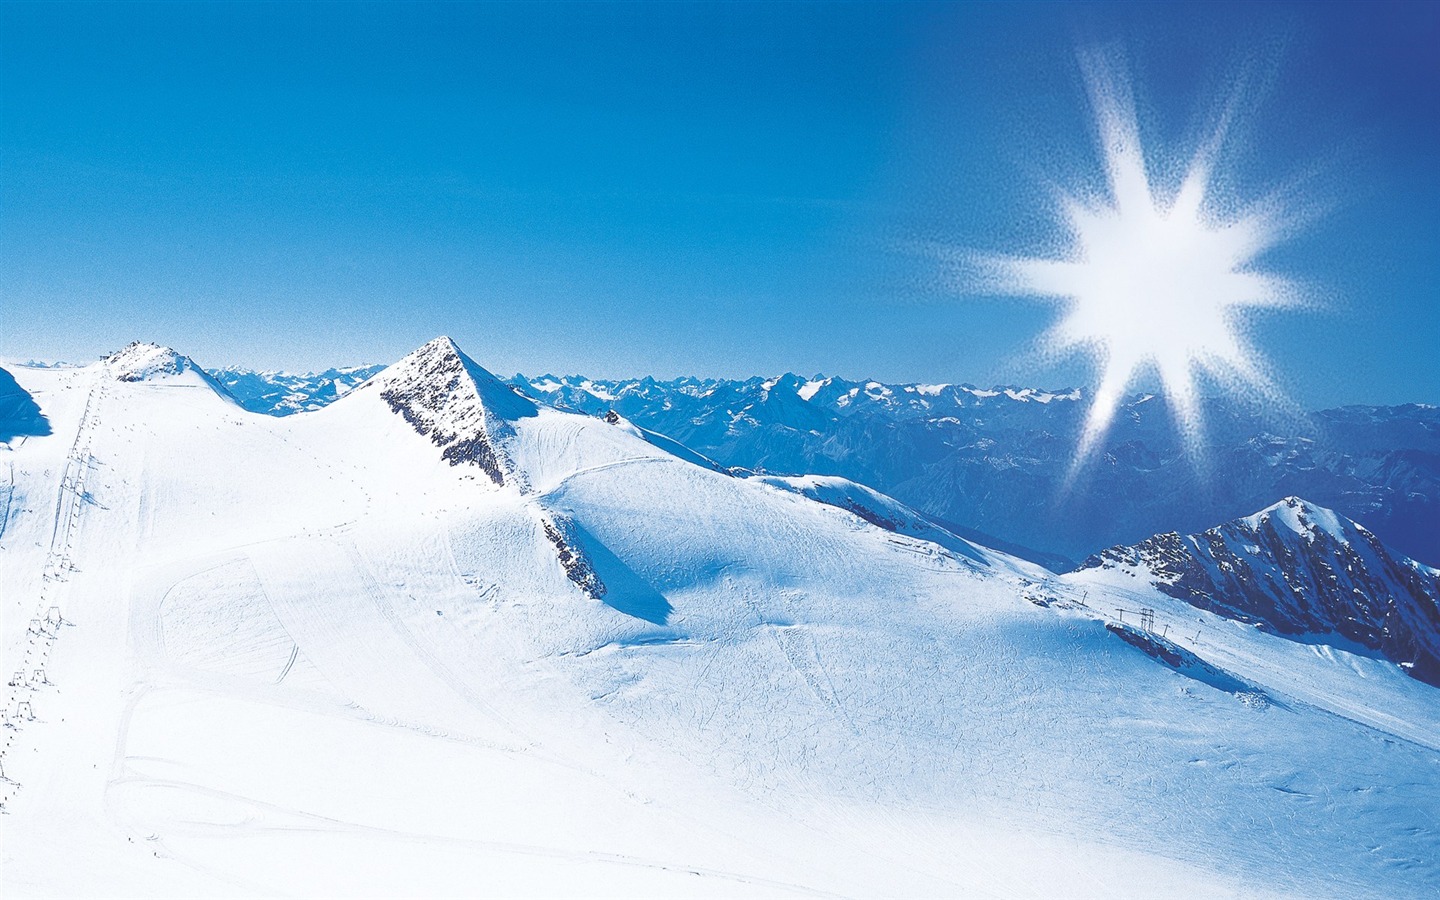 Beautiful Snowsacpe of Alps under Sunny Sky - Alps Winter Vacation